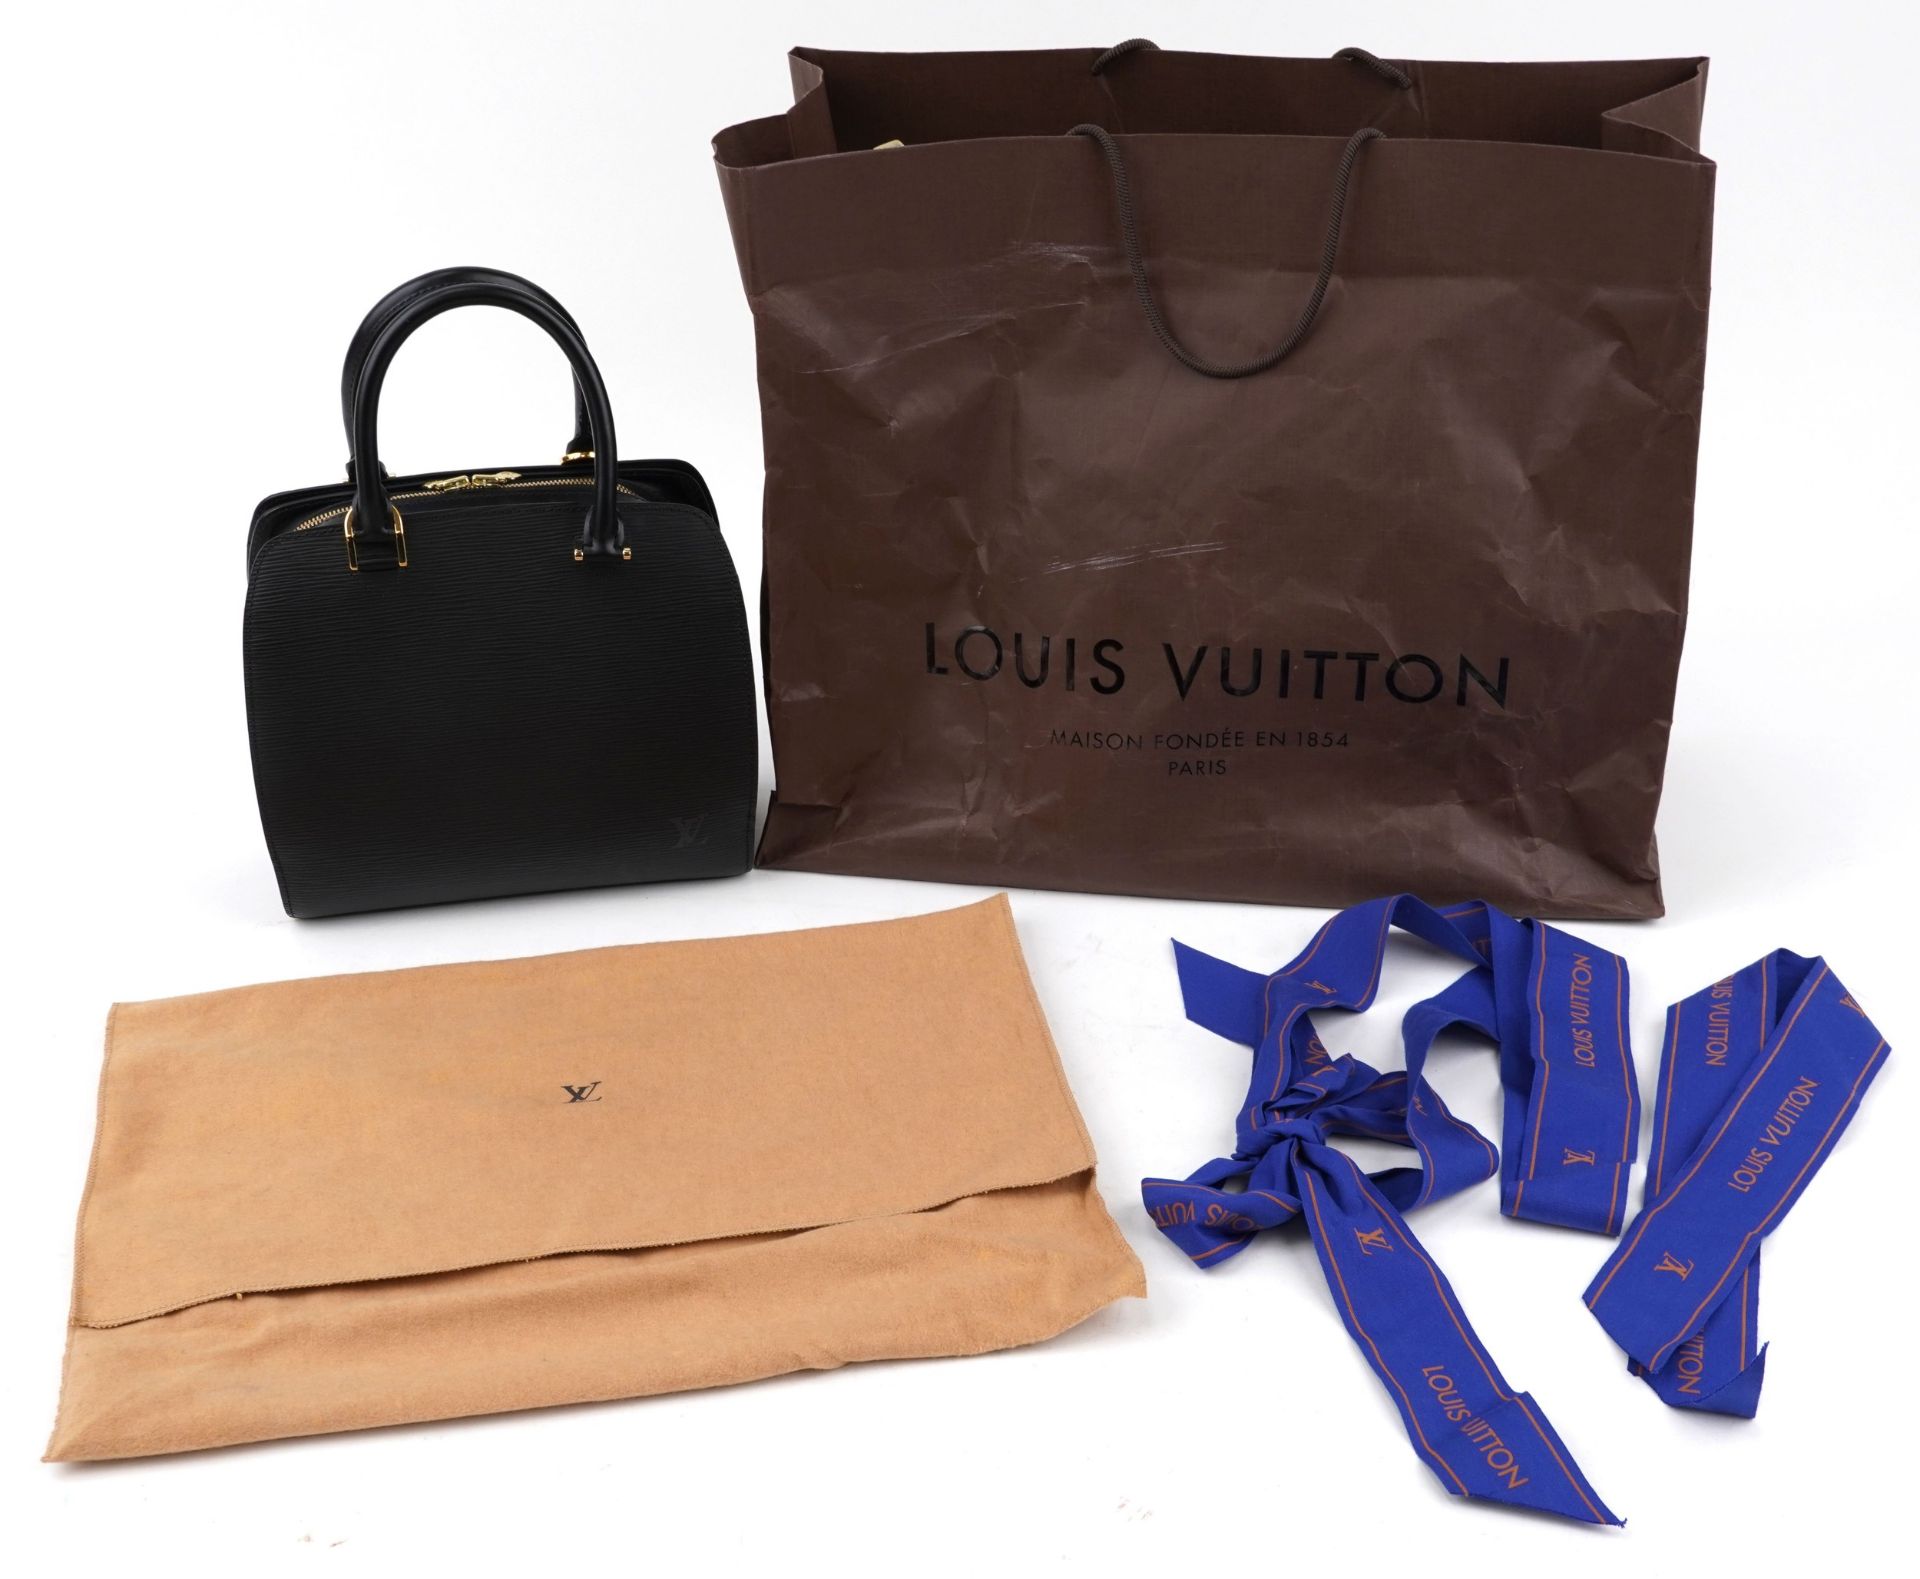 Louis Vuitton Pont Neuf handbag with dust bag, 26.5cm wide